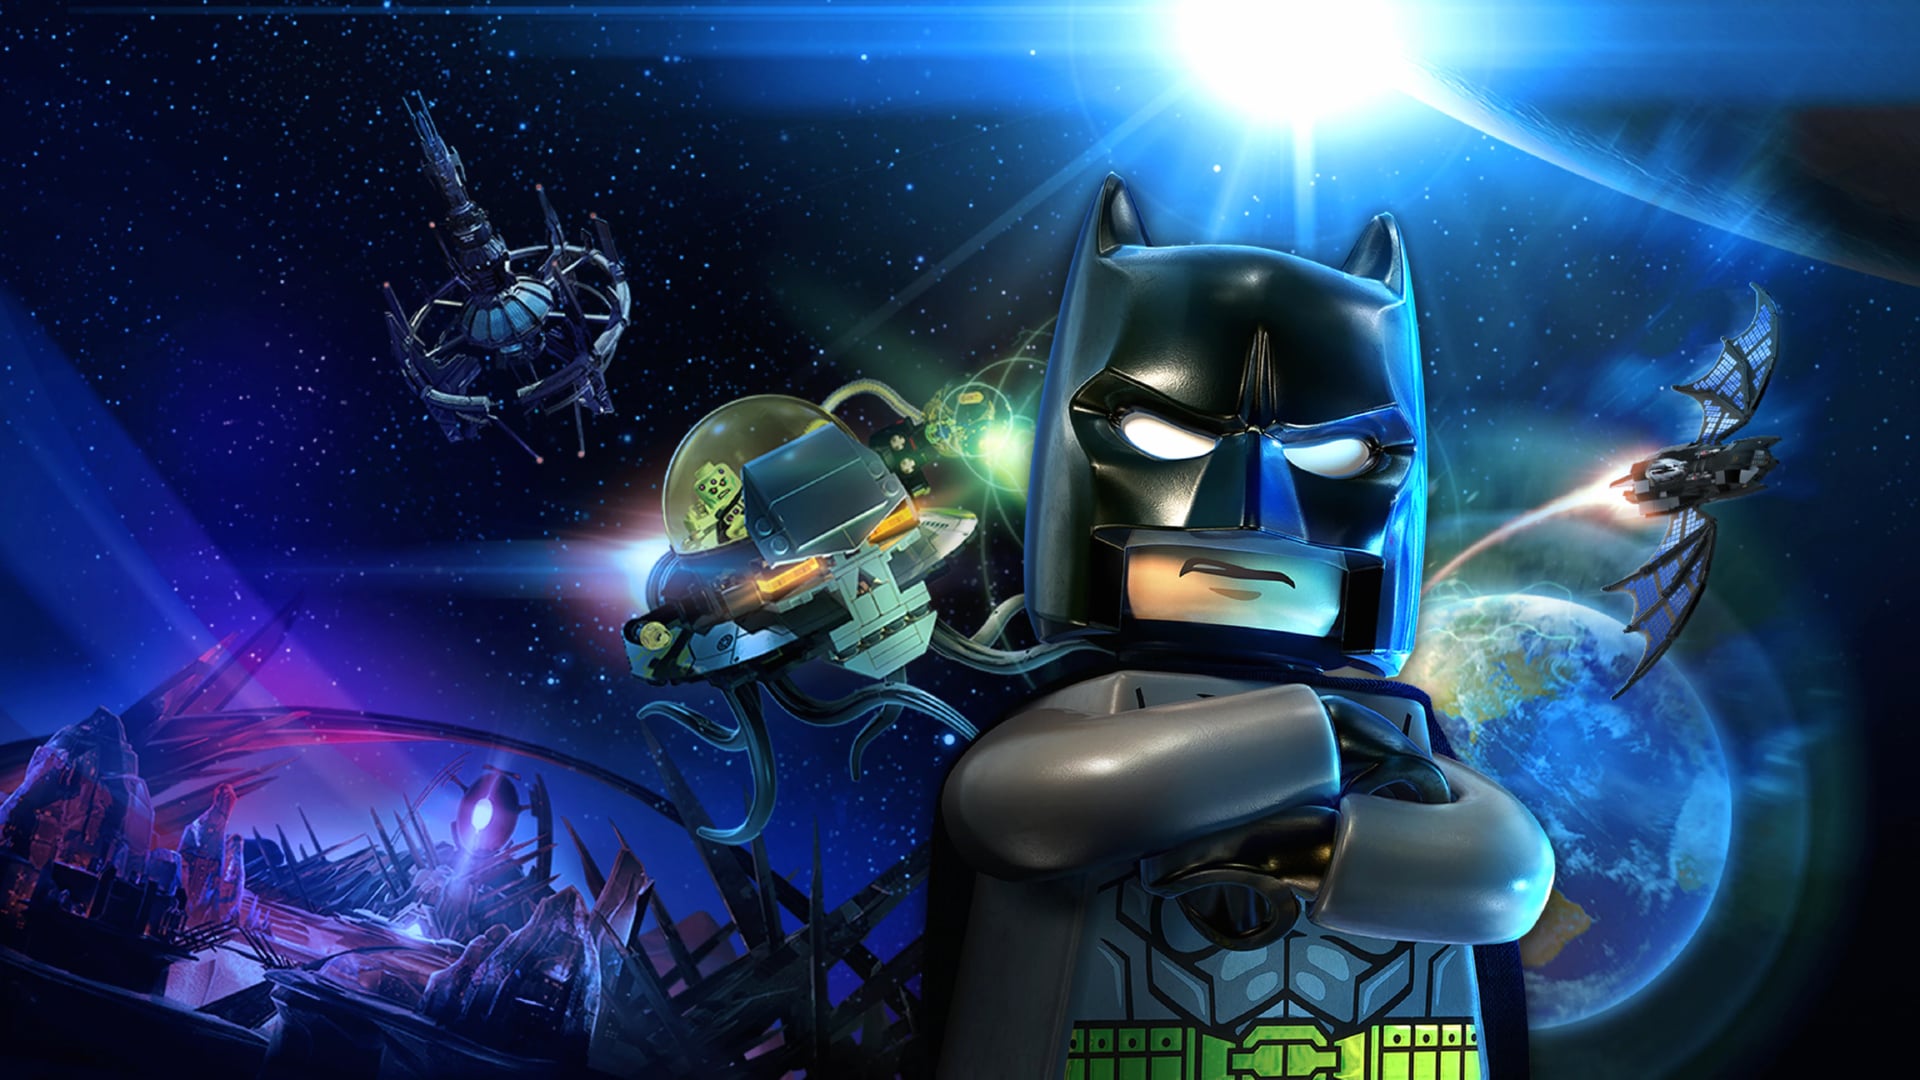 LEGO Batman 3 Beyond Gotham at 1280 x 960 size wallpapers HD quality